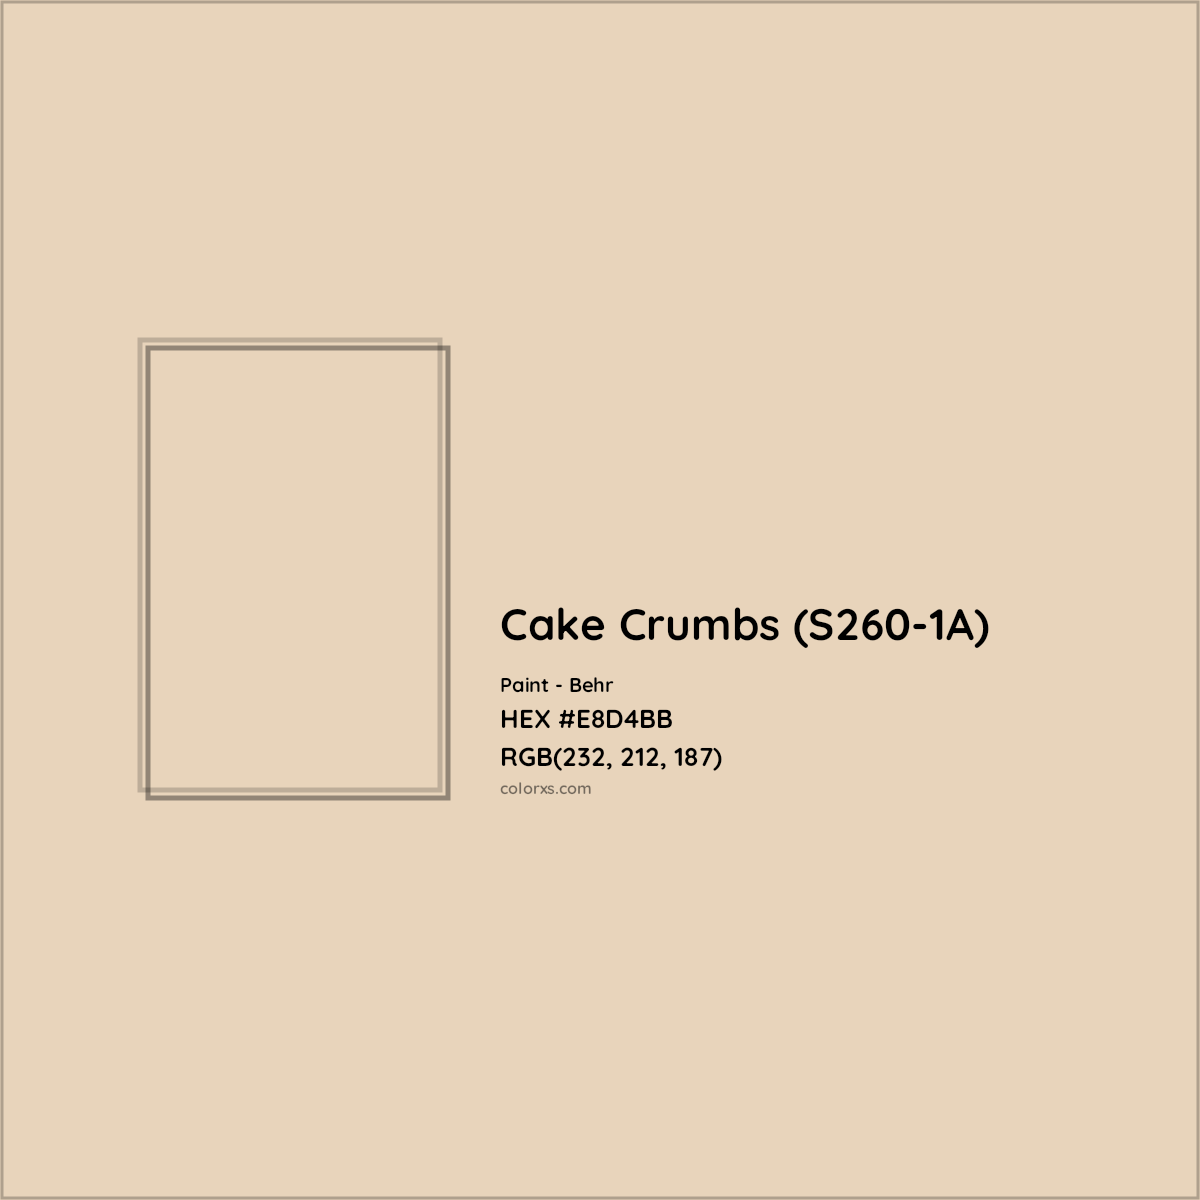 HEX #E8D4BB Cake Crumbs (S260-1A) Paint Behr - Color Code